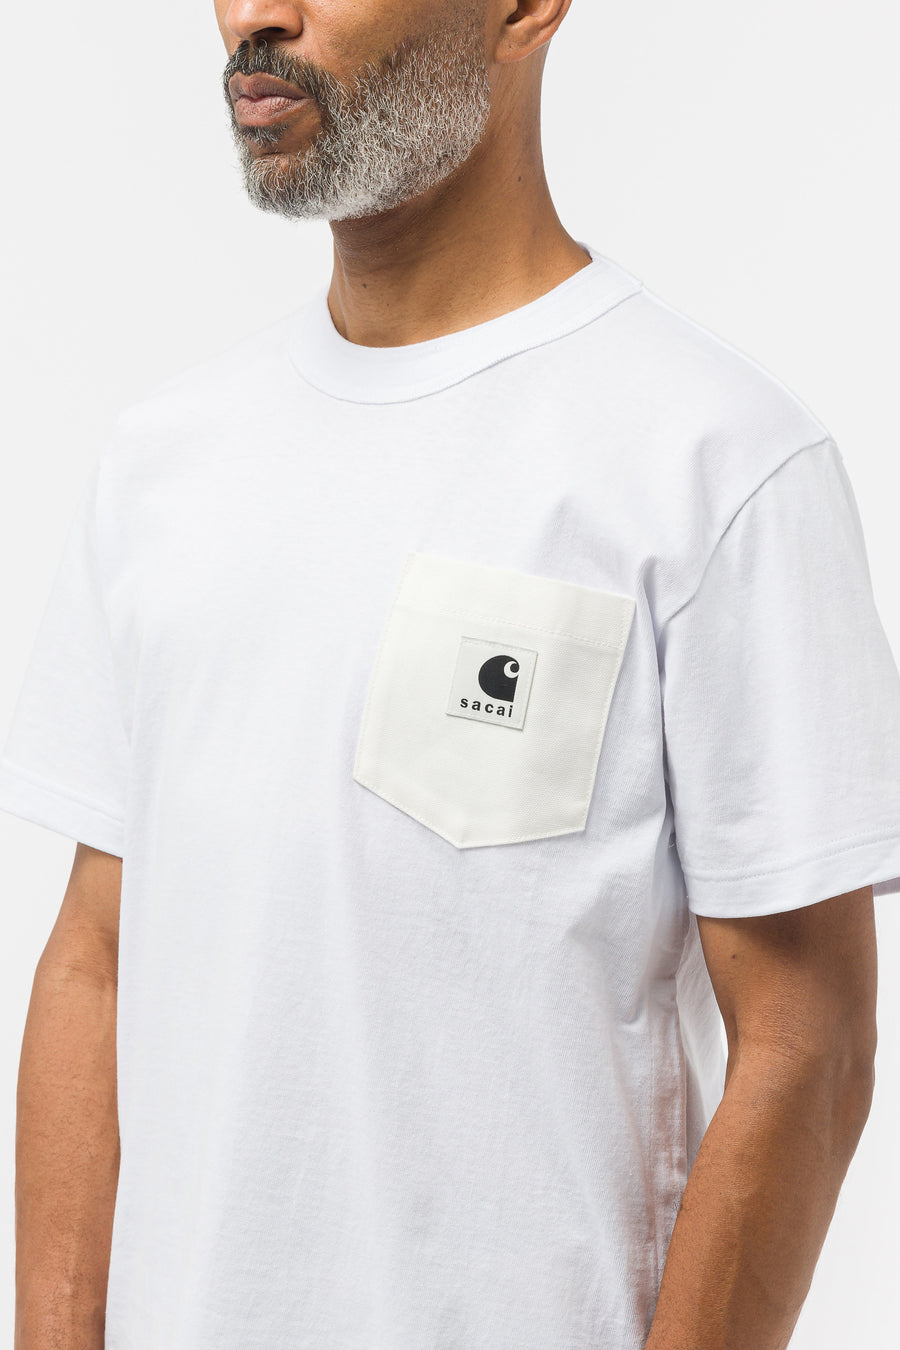 sacai   Men's Carhartt WIP T Shirt in White